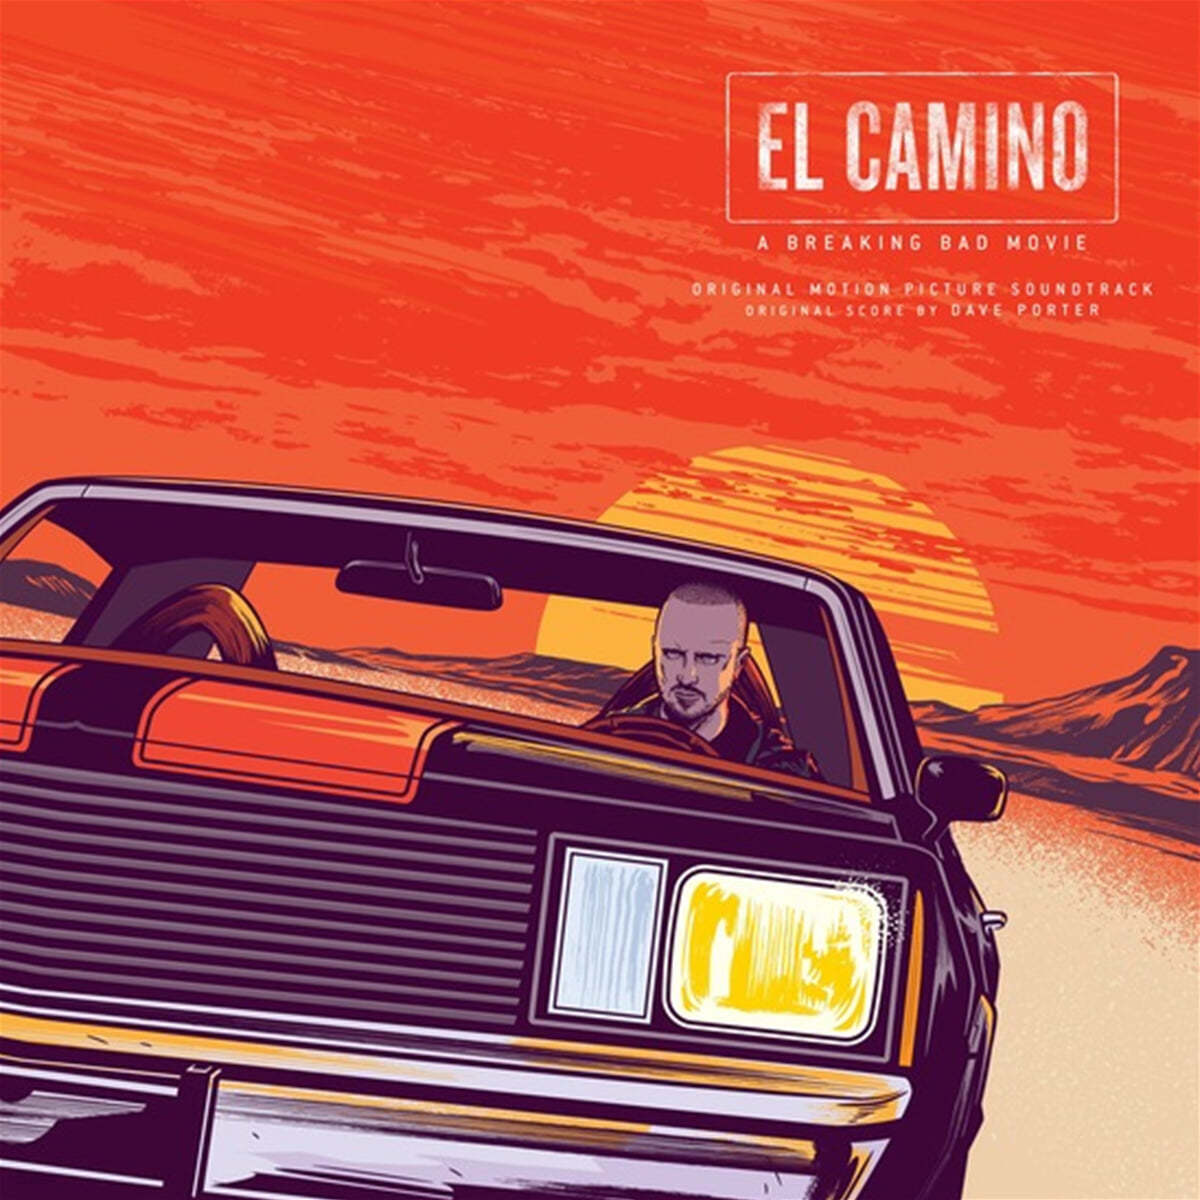 Netflix '브레이킹 배드 무비: 엘 카미노' 영화음악 (El Camino: A Breaking Bad Movie OST by Dave Porter) [2LP] 